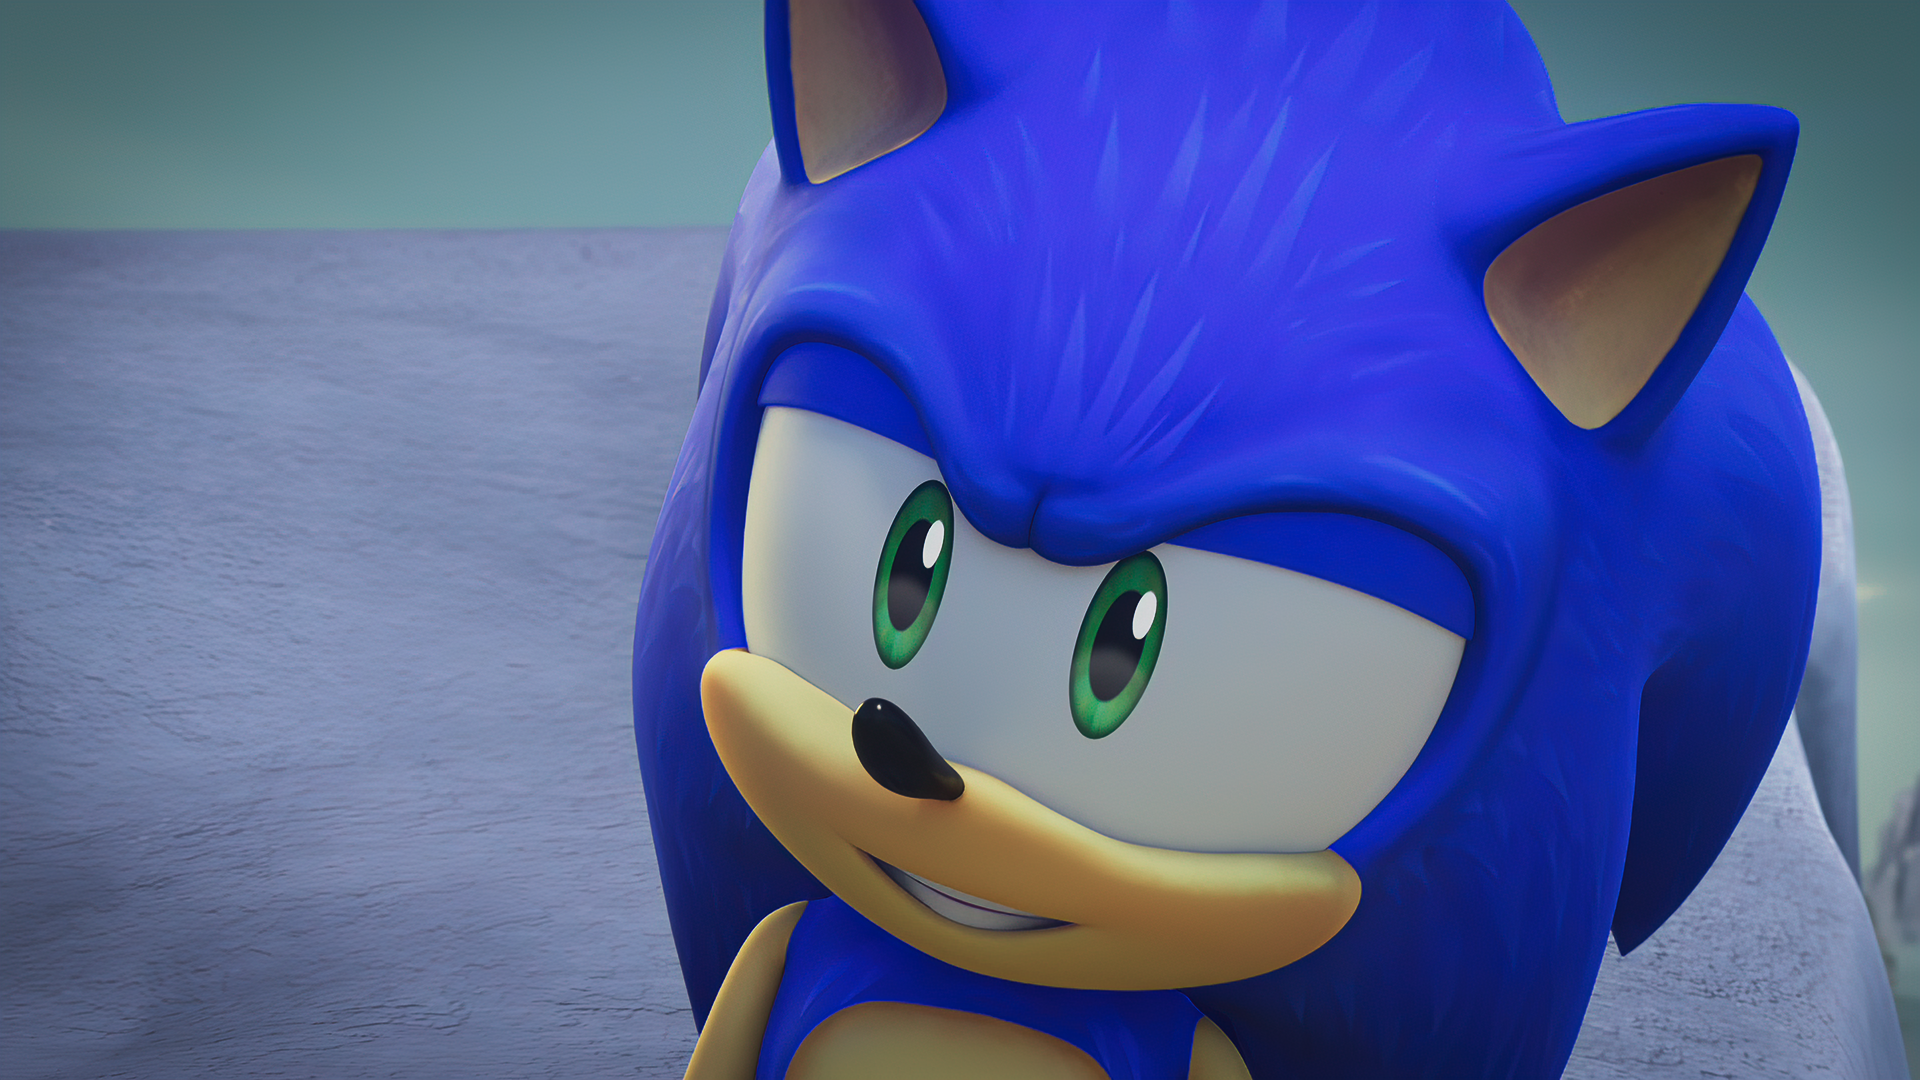 New Teaser Trailer of Sonic Prime (Season 3) by Shinylaeriza12 on DeviantArt